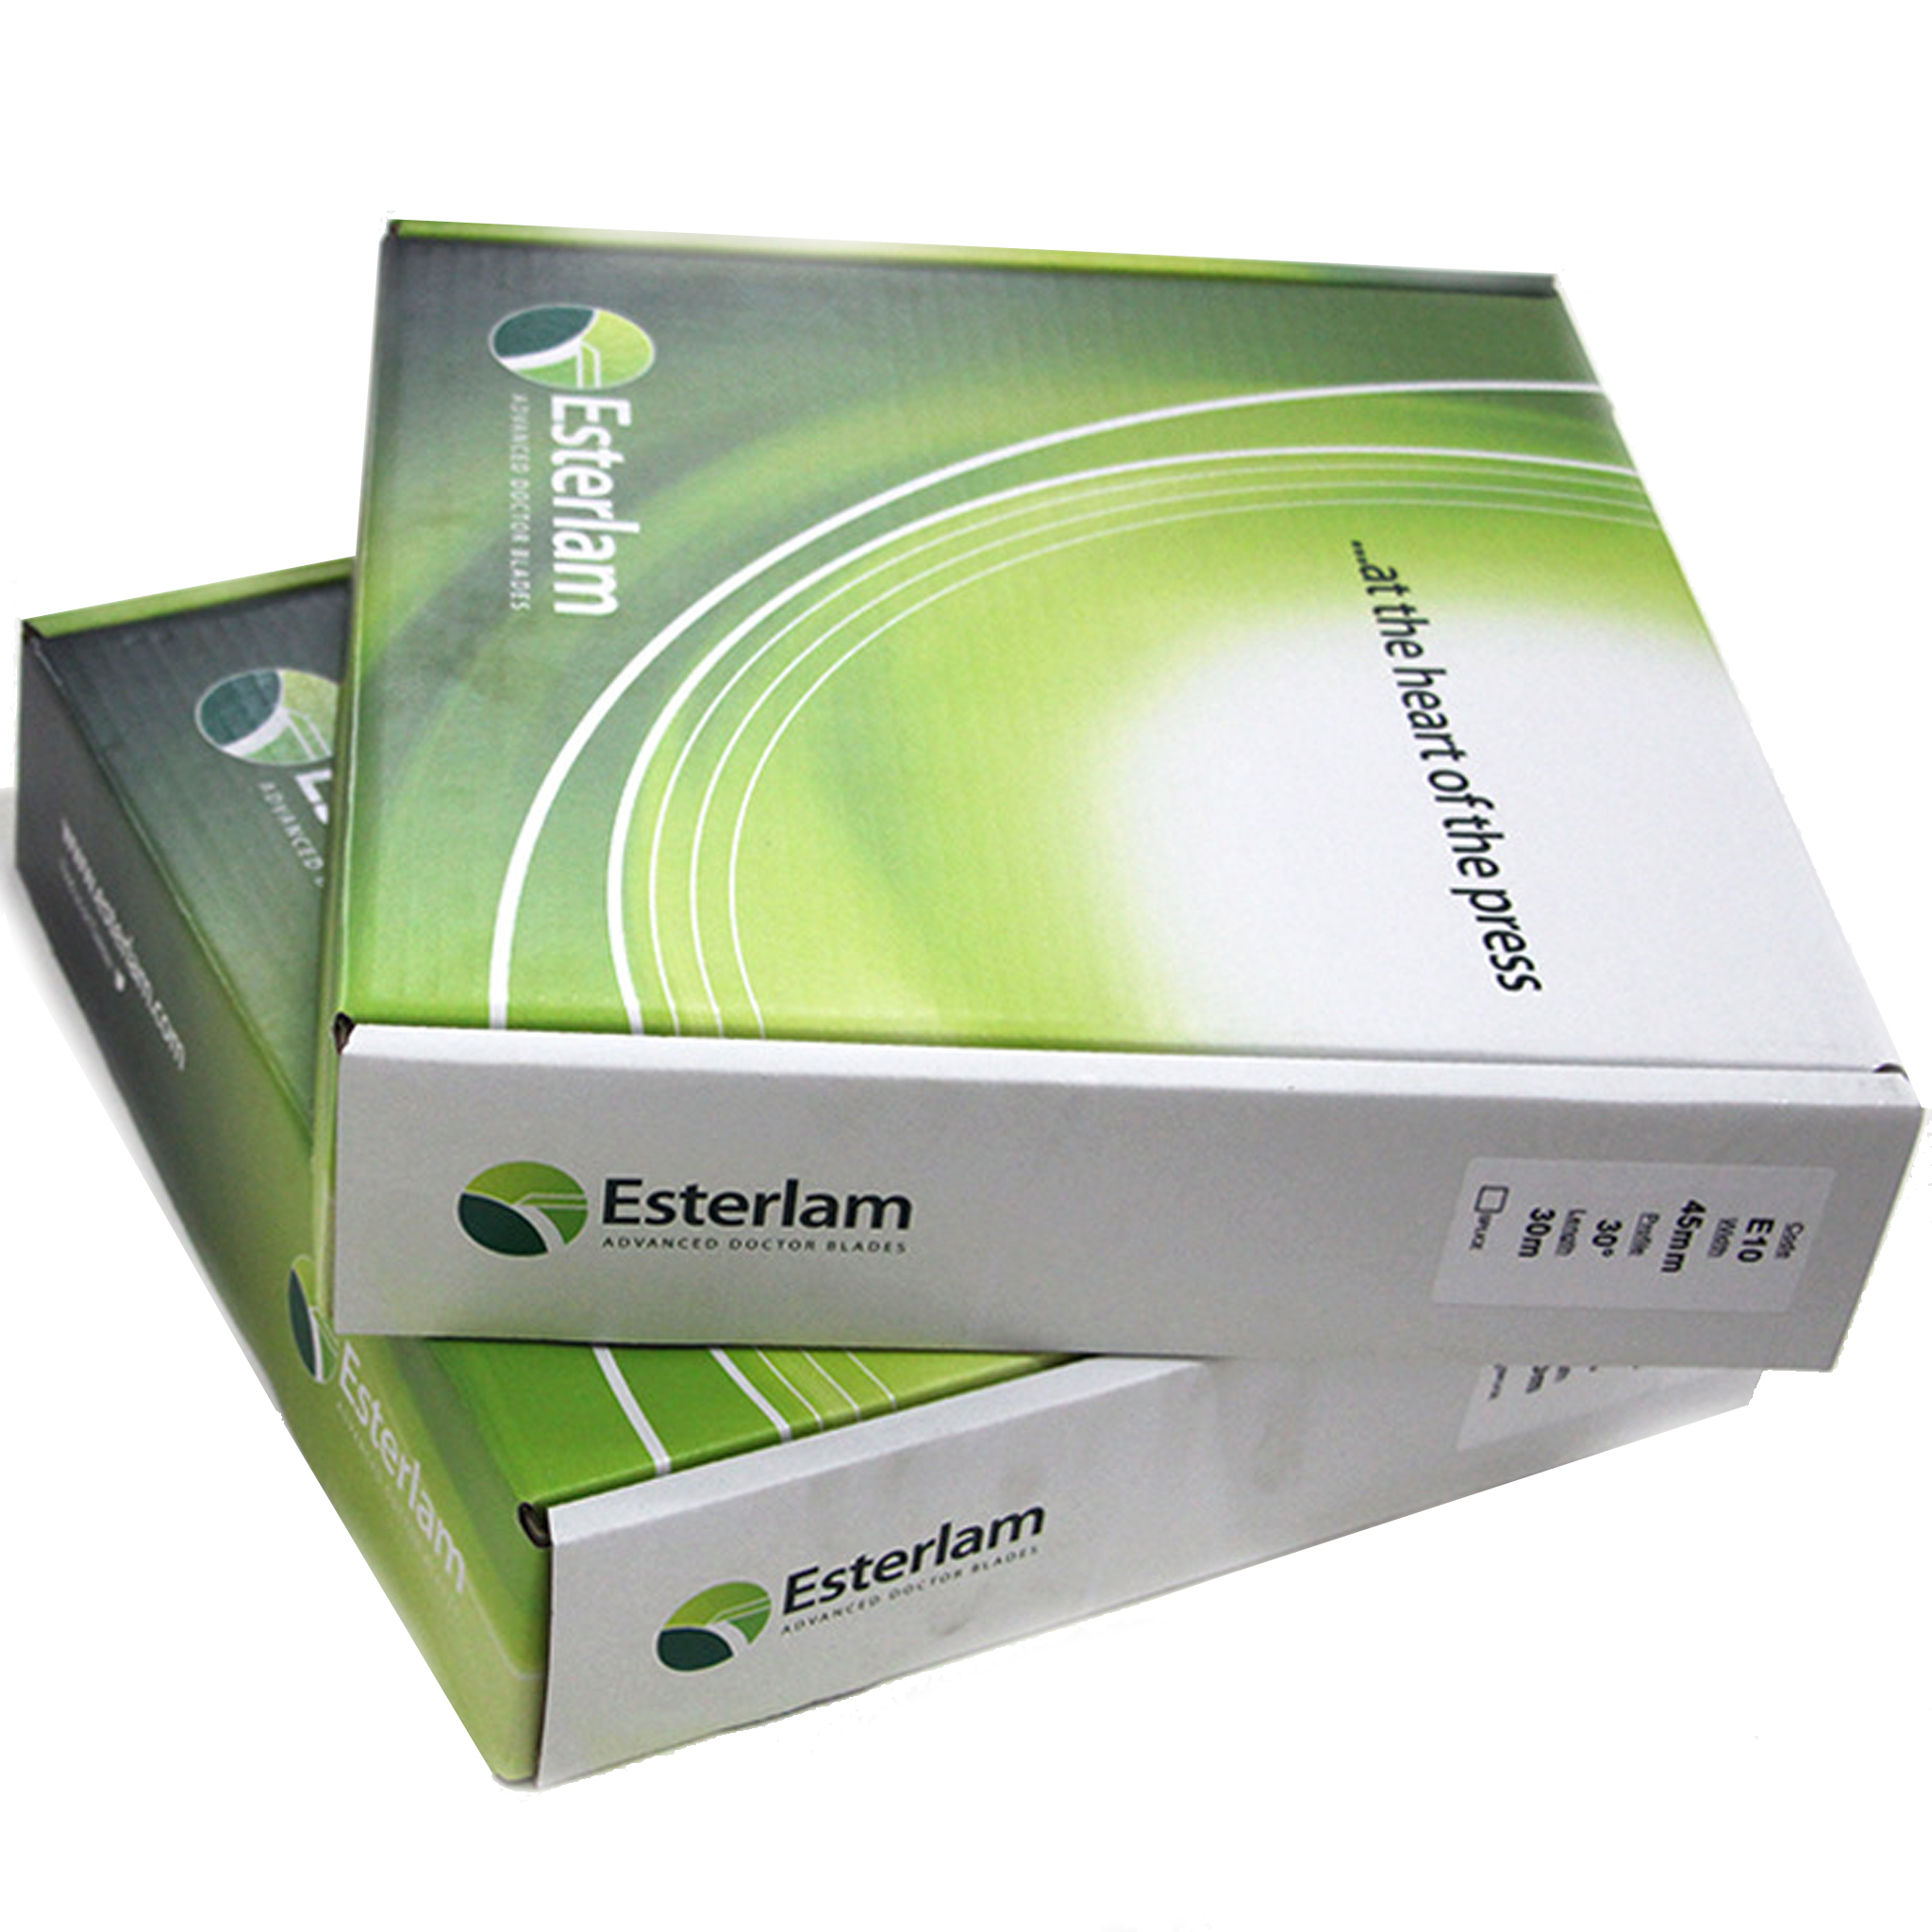 Esterlam Advanced Doctor Blades-FENGCHENG